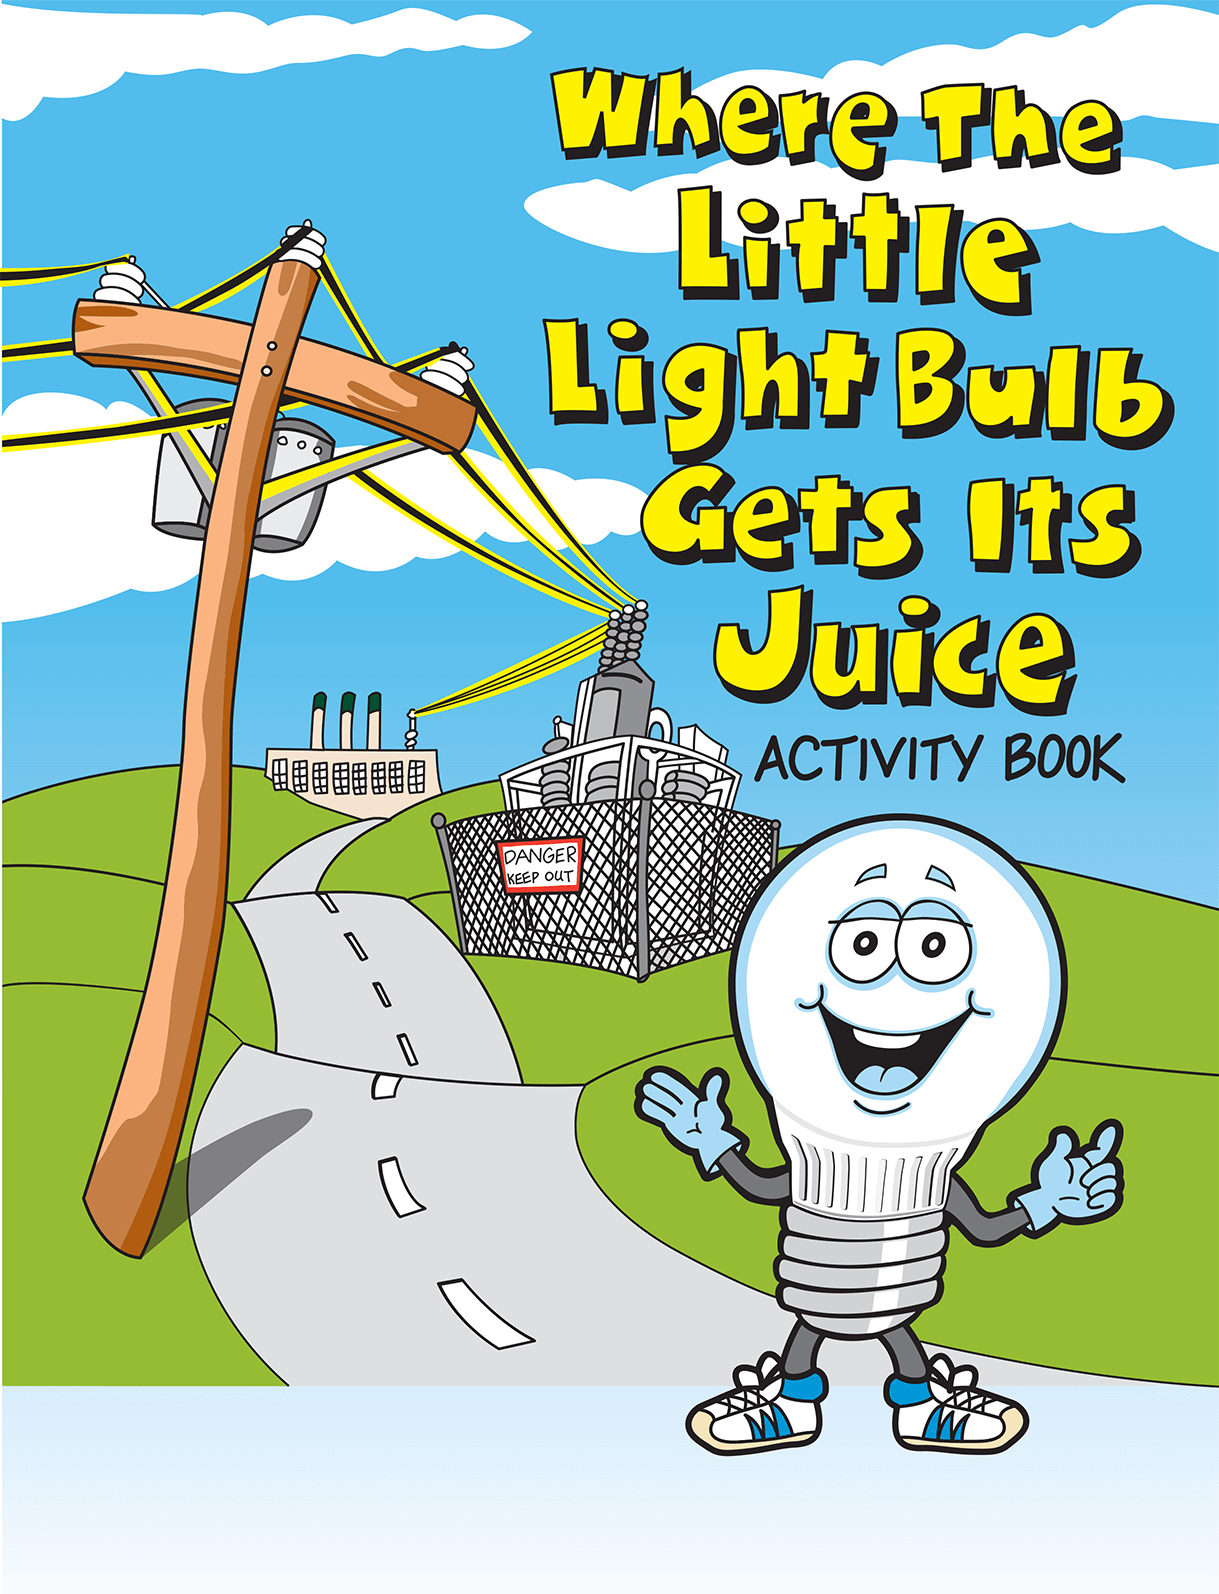 35200 Where The Little Lightbulb Gets Its Juice AB lg